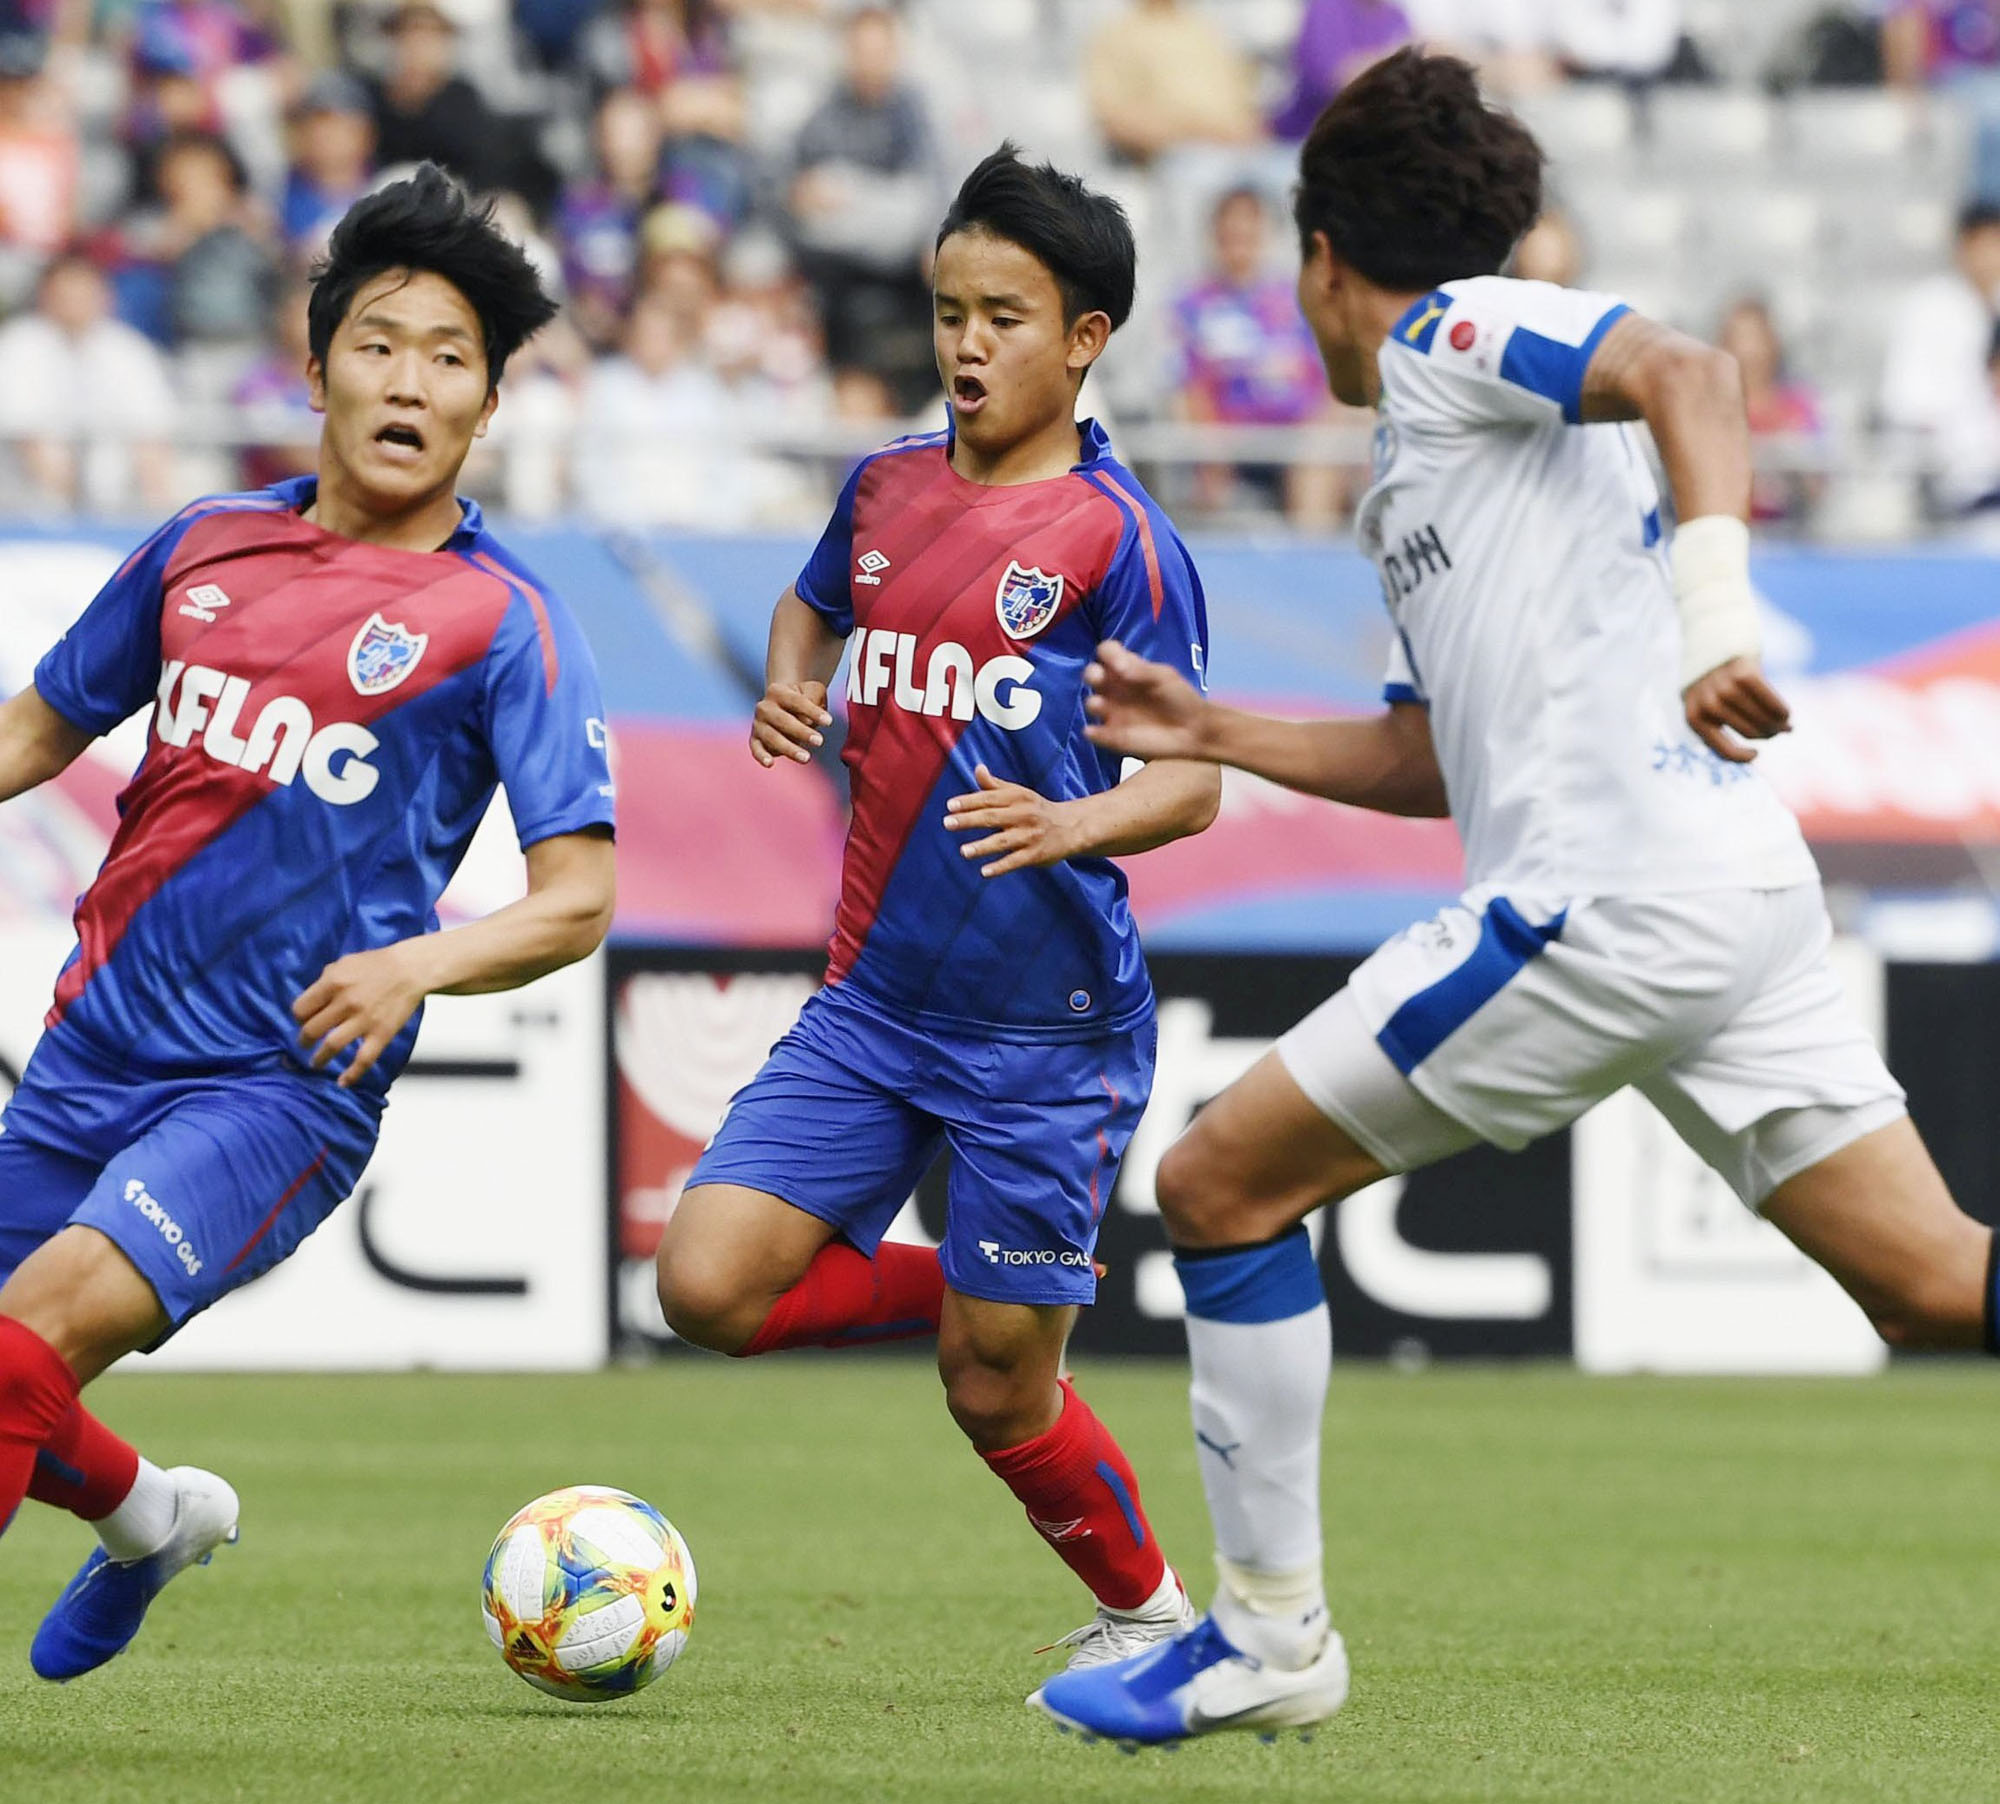 FC Tokyo's Kubo controls the ball in Saturday's match against Oita Trinita at Ajinomoto Stadium. | KYODO